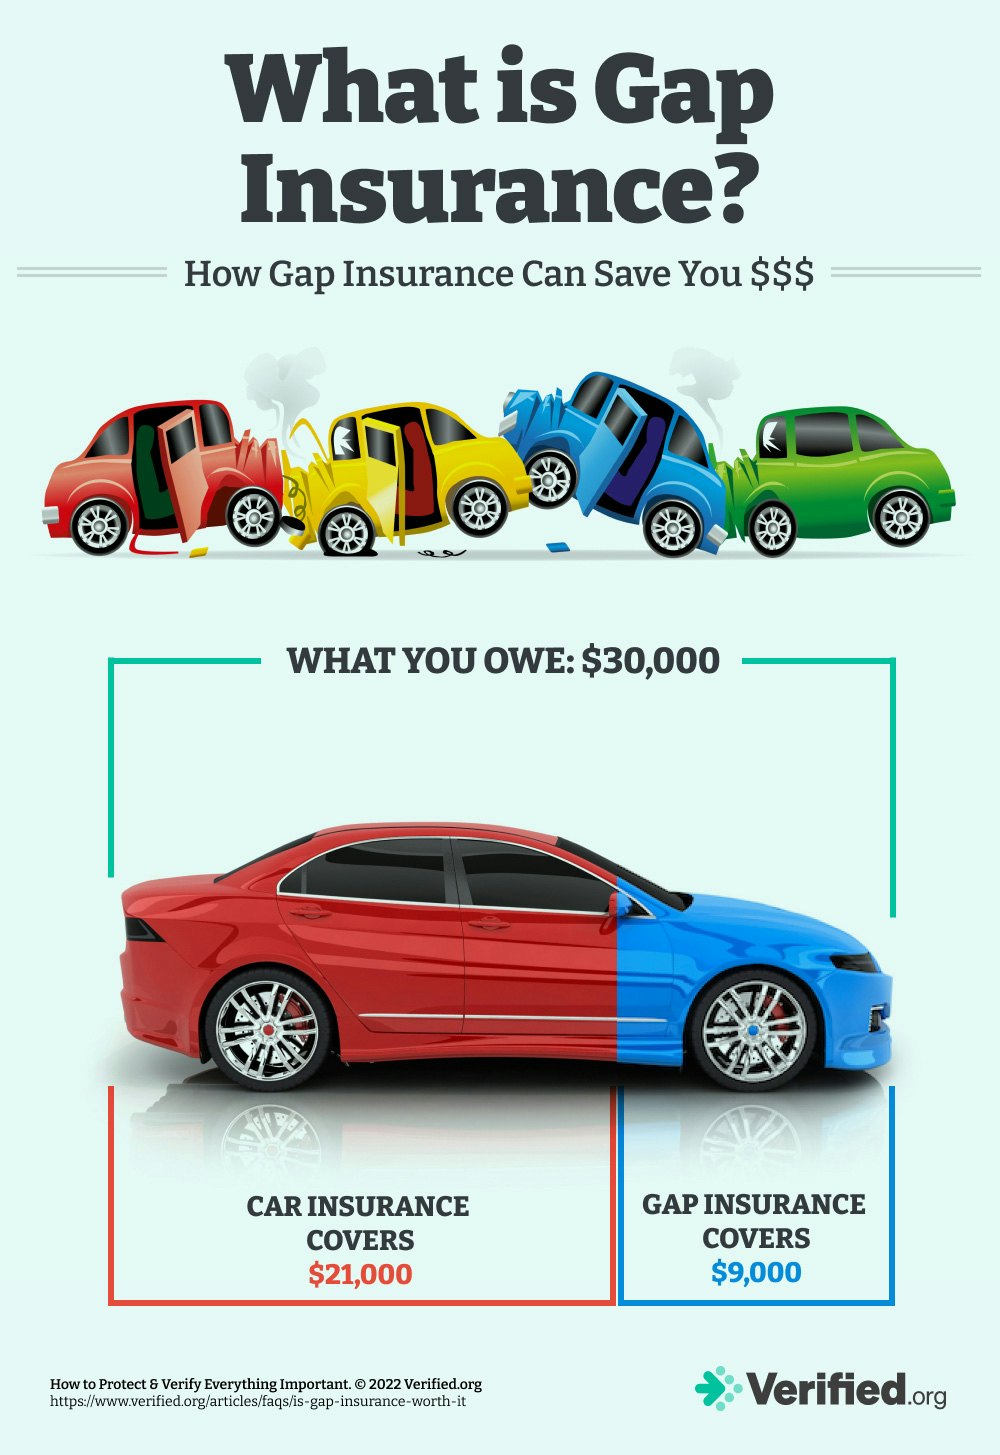 Do You Need Gap Insurance?